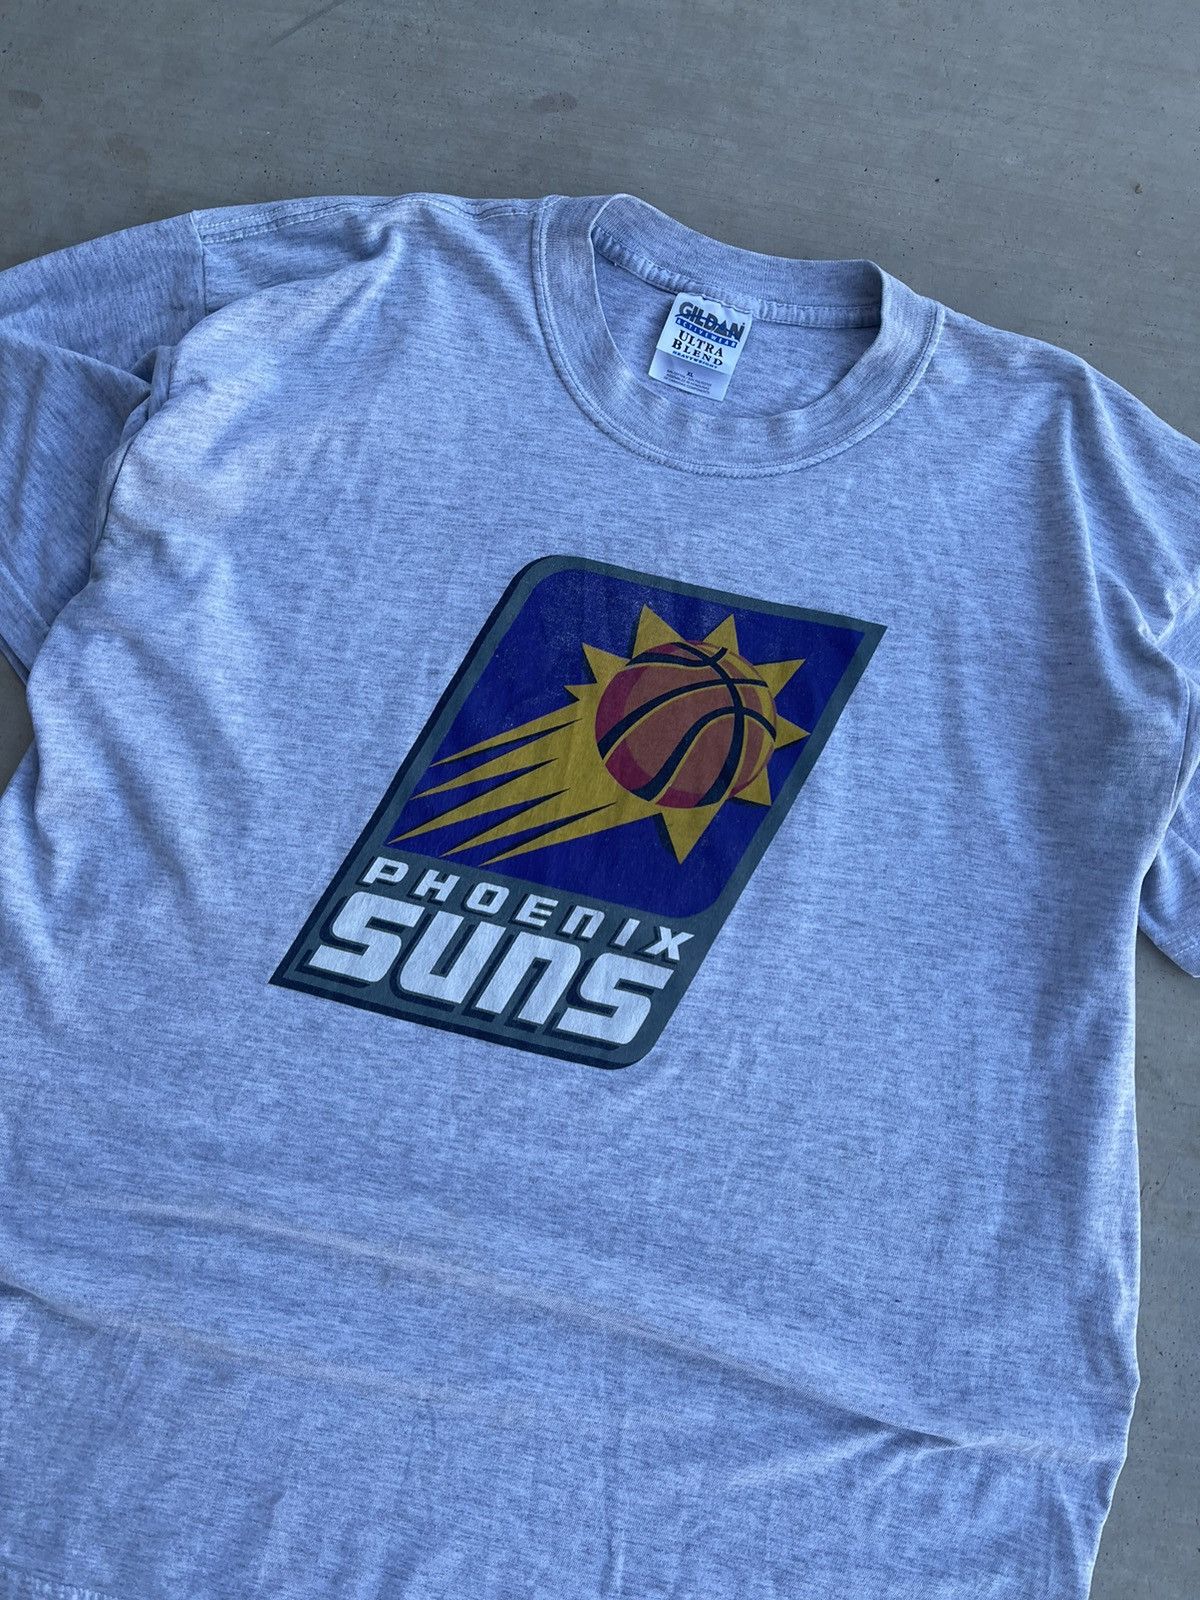 Nike Vintage Early 2000’s Phoenix Suns Basketball T Shirt Size XL Size US XL / EU 56 / 4 - 4 Thumbnail